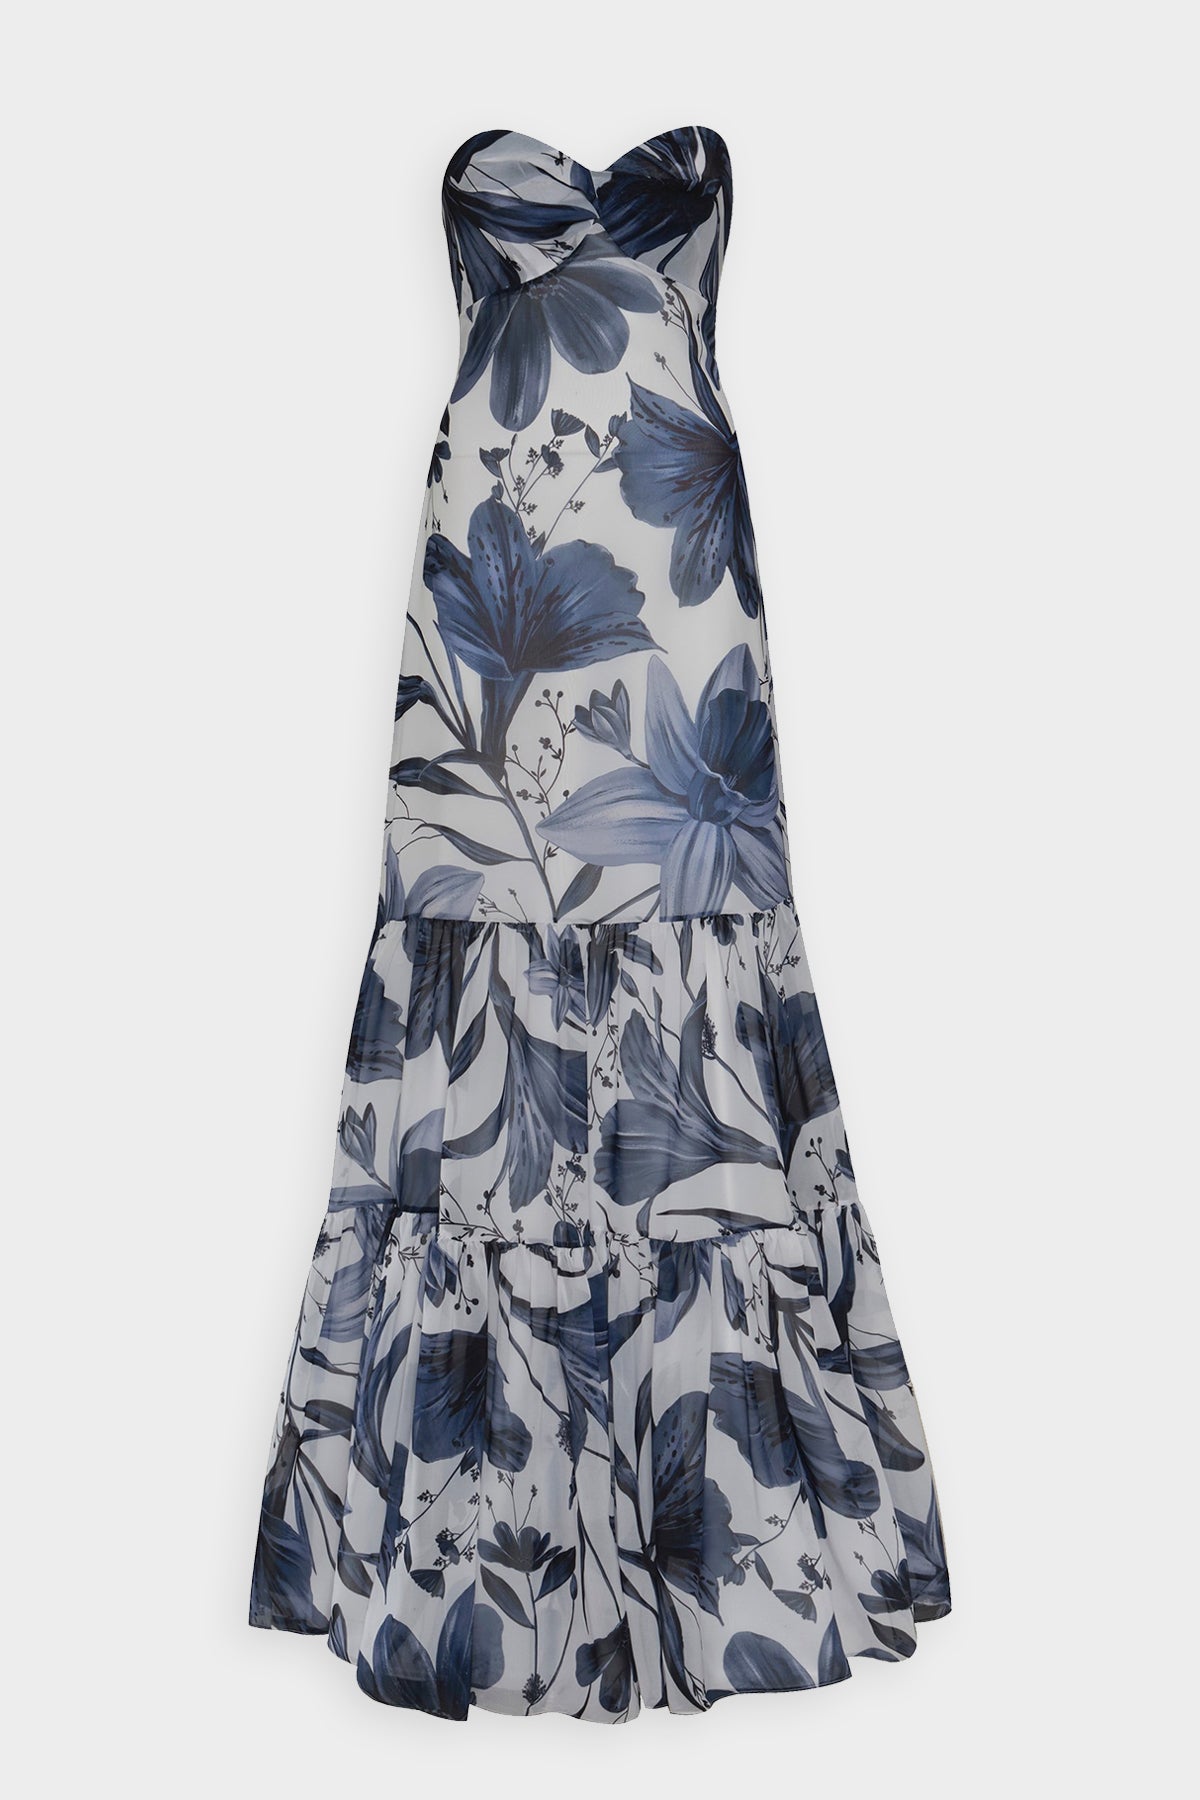 Garza Dress in Navy Floral Print - shop-olivia.com